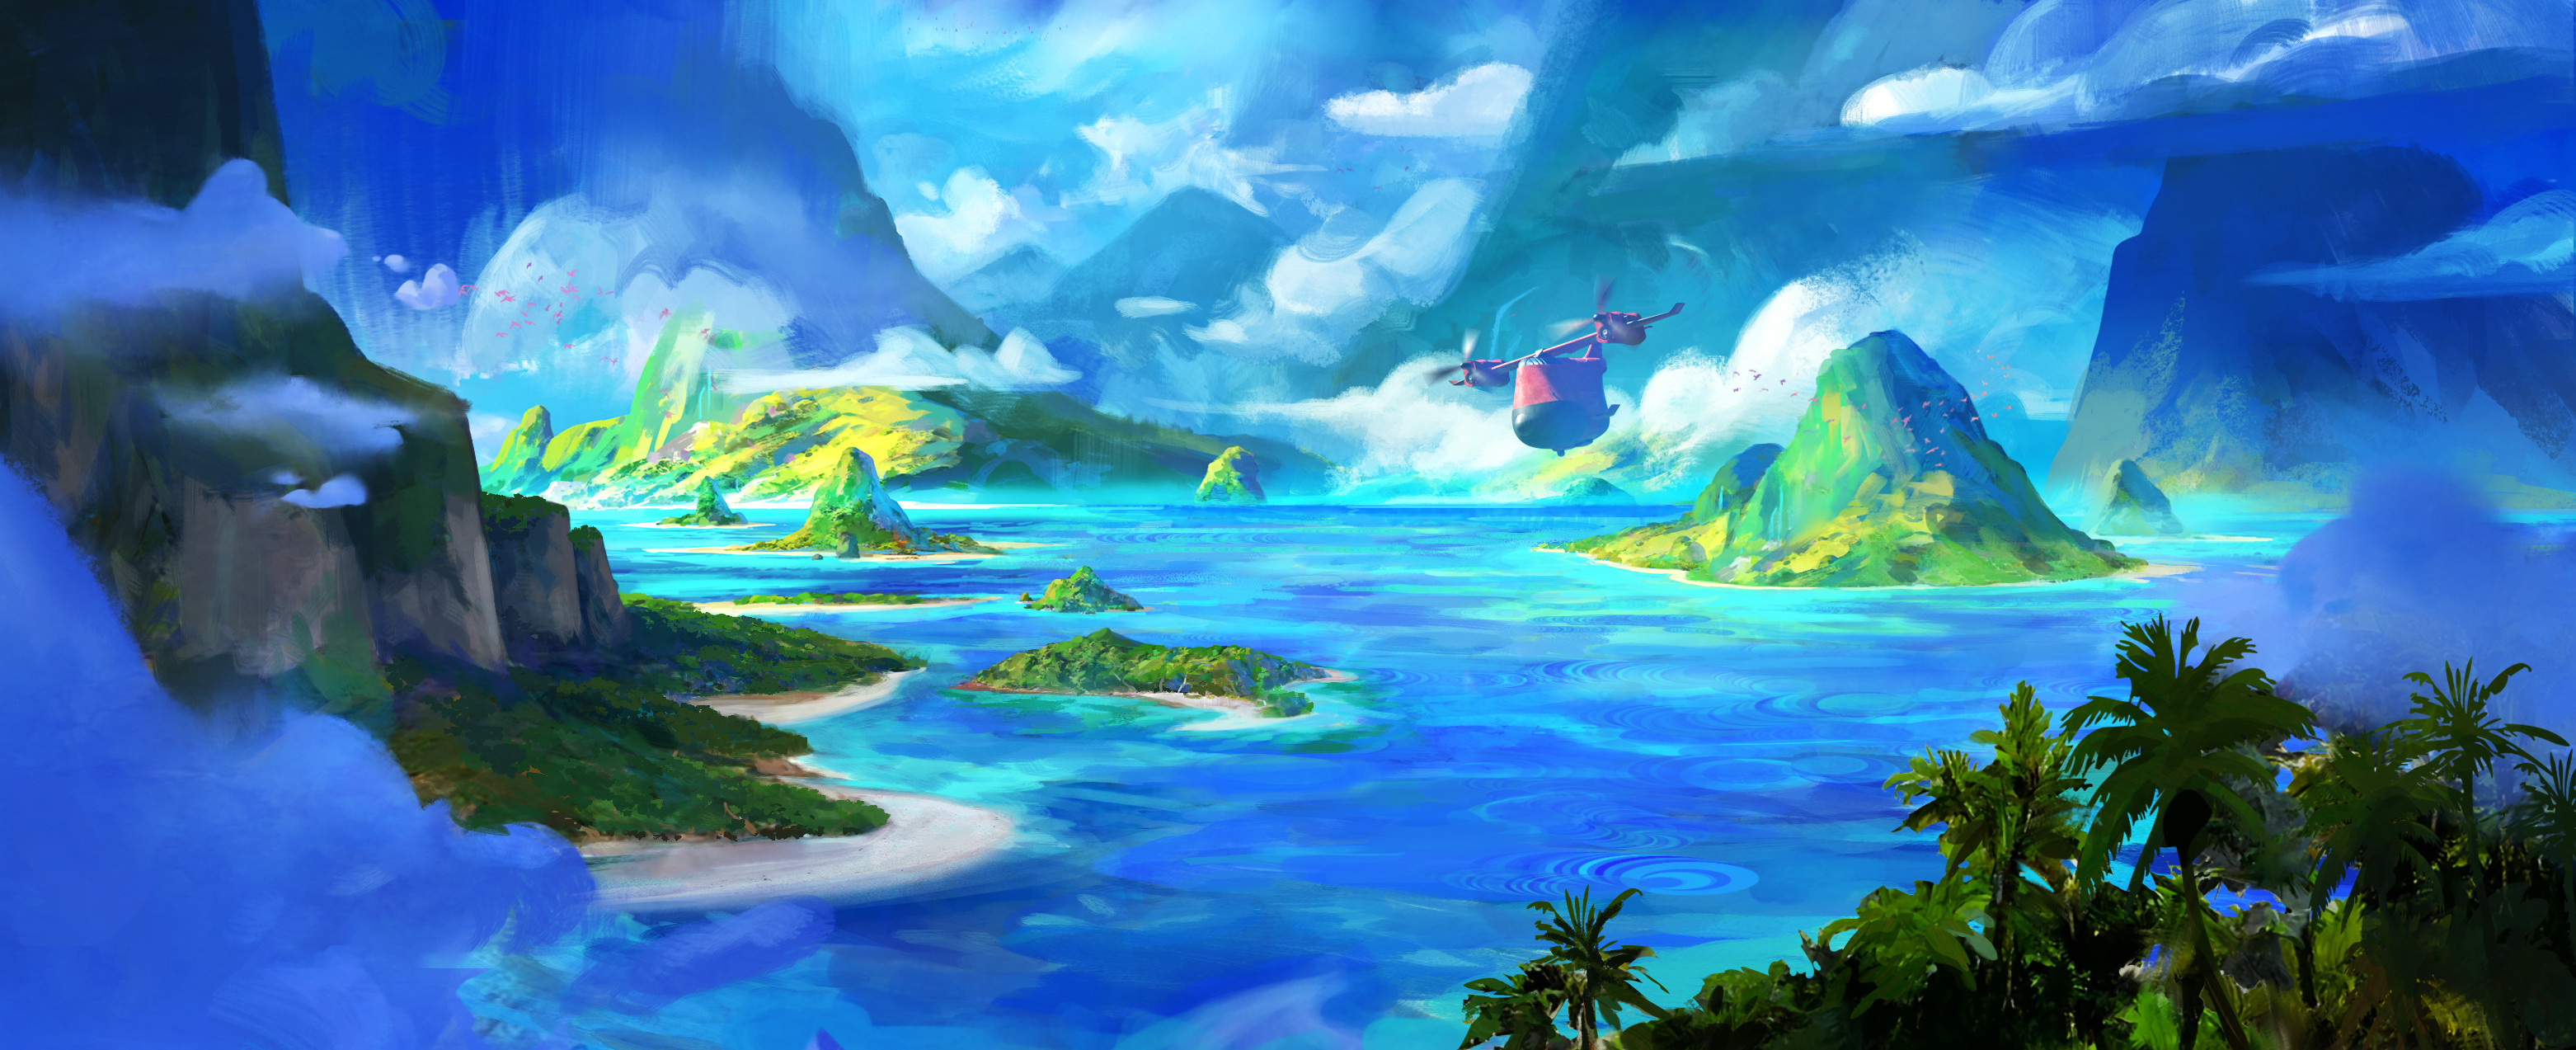 Gavin ODonnell Digital Art Artwork Illustration Environment Fantasy Art Island Nature Landscape Sea  3124x1273